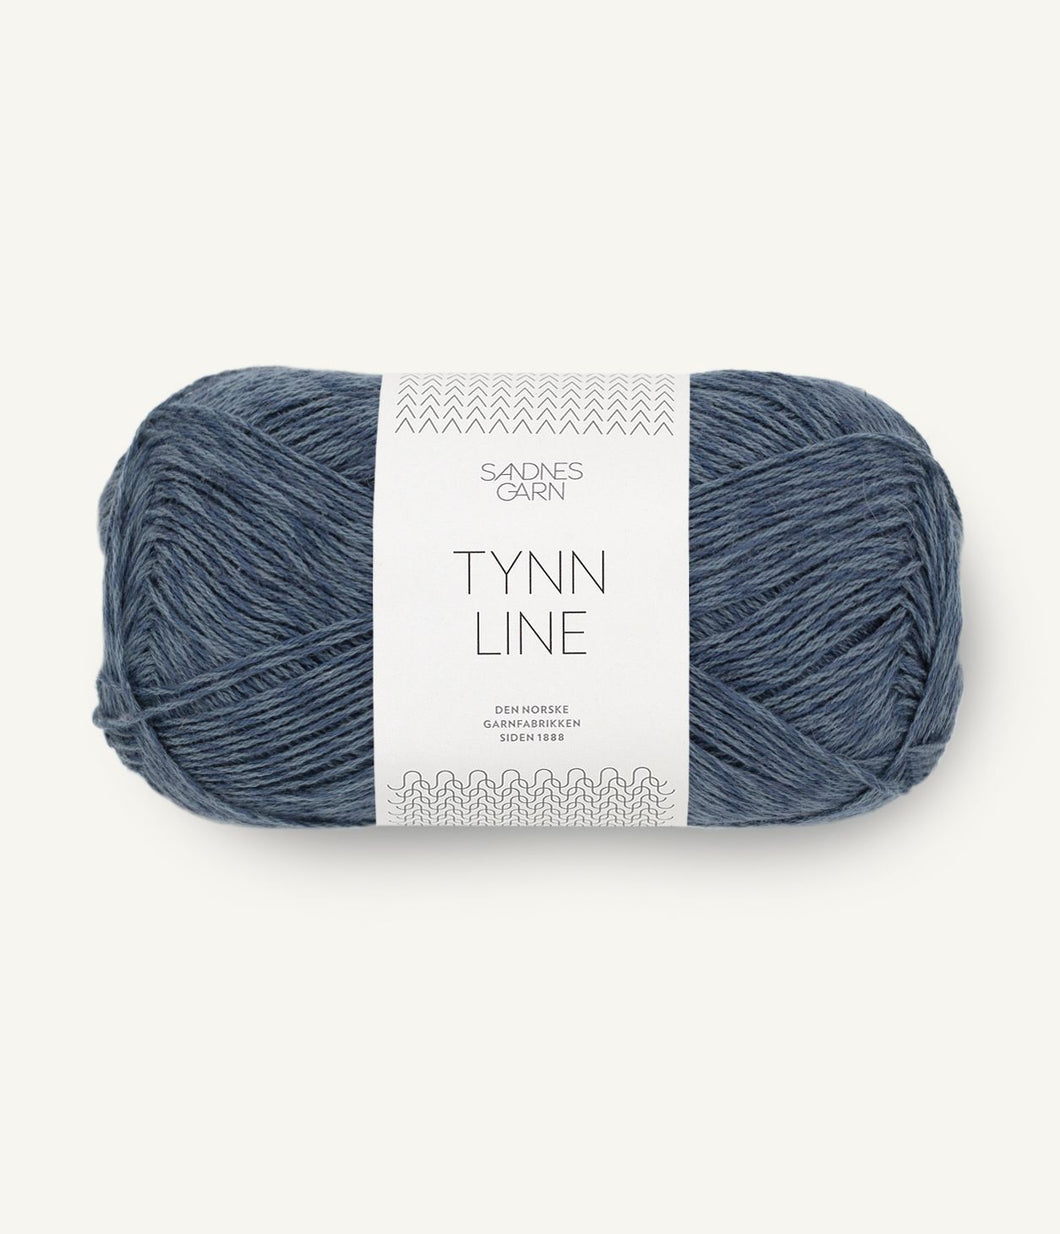 Sandnes Tynn Line - Dark Blue Grey 6061